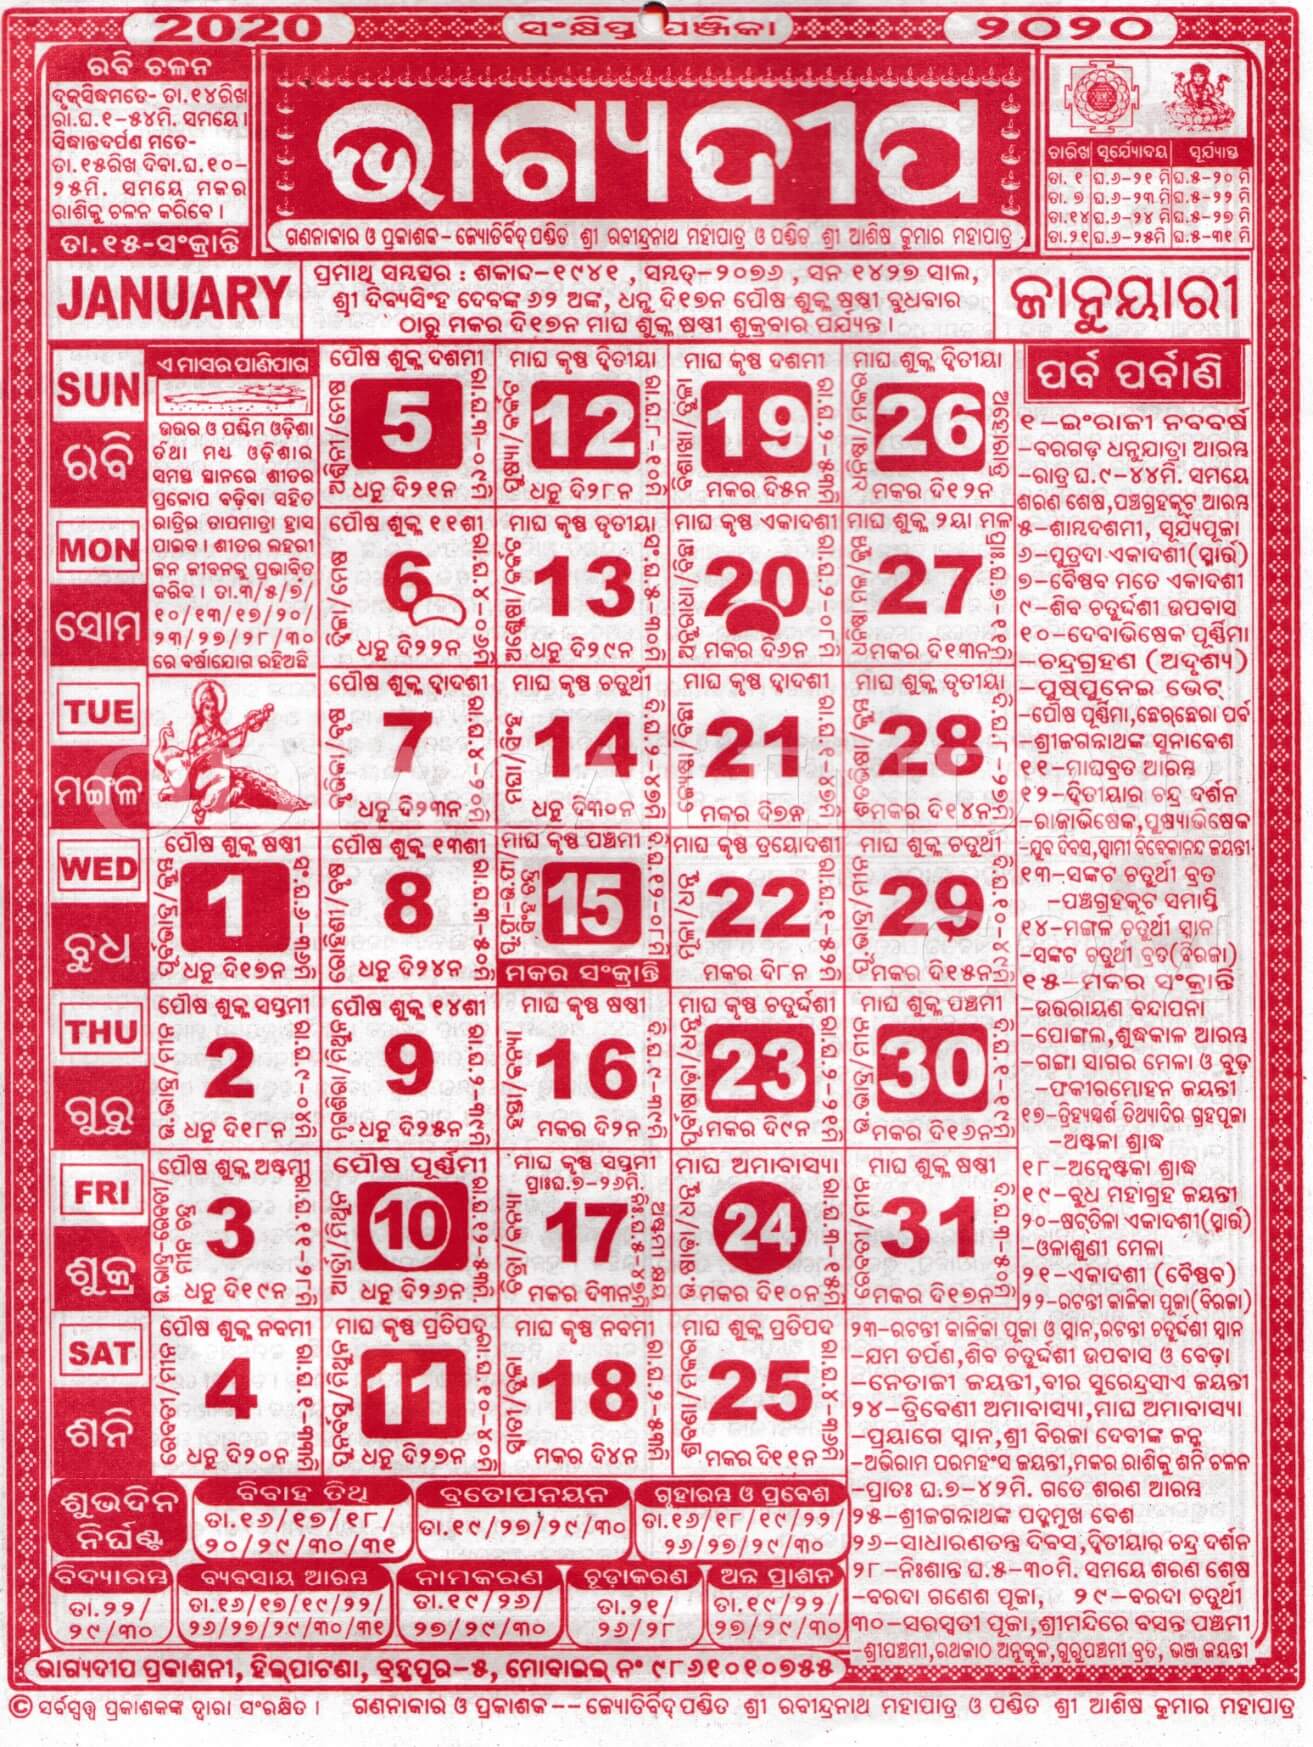 Bhagyadeep Odia Calendar January 2020 - Download HD Quality